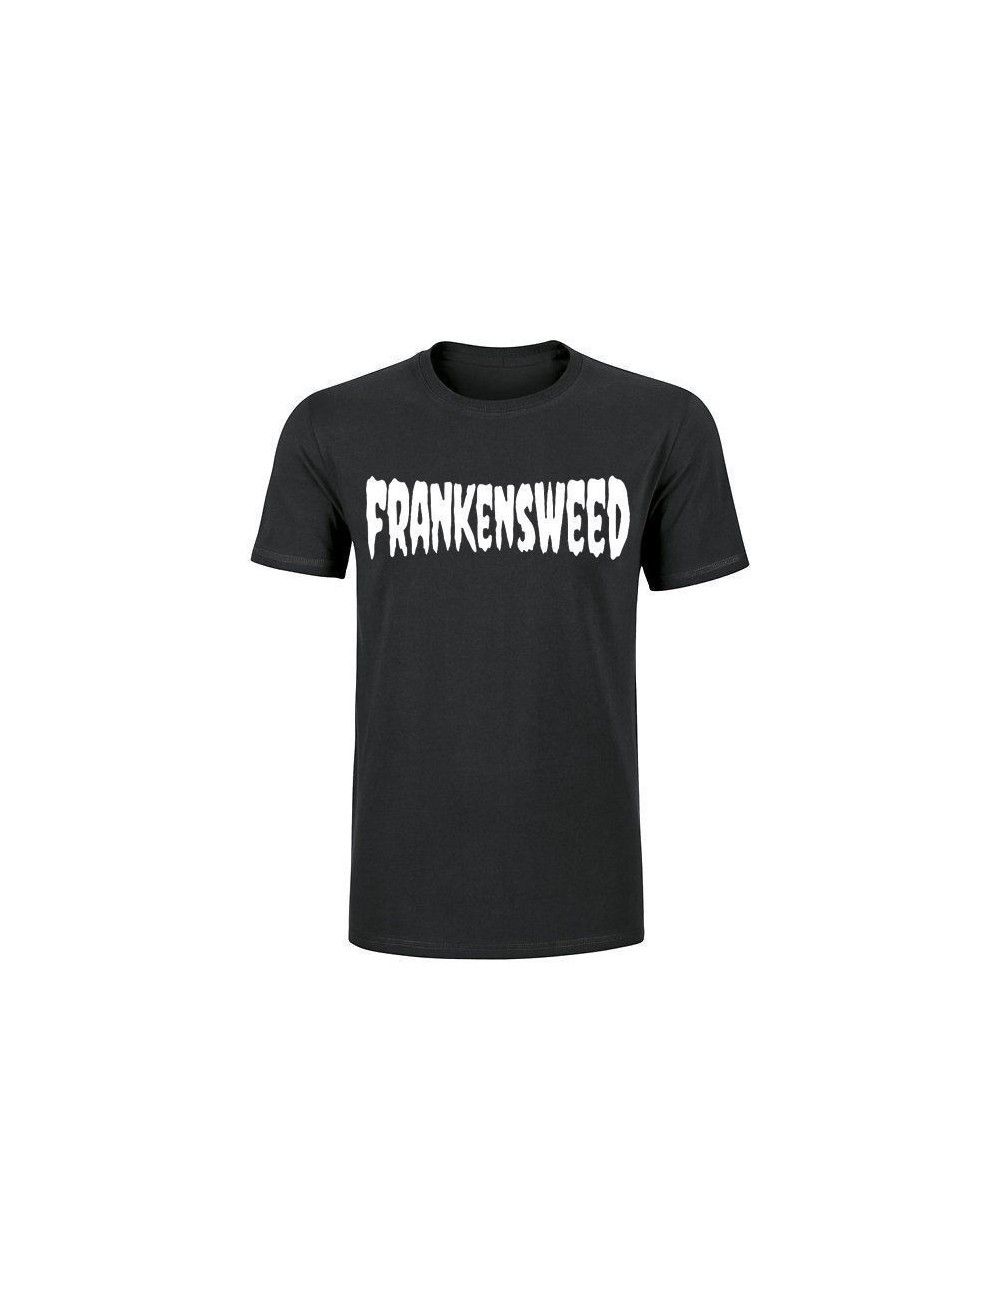 Camiseta Frankensweed 2018